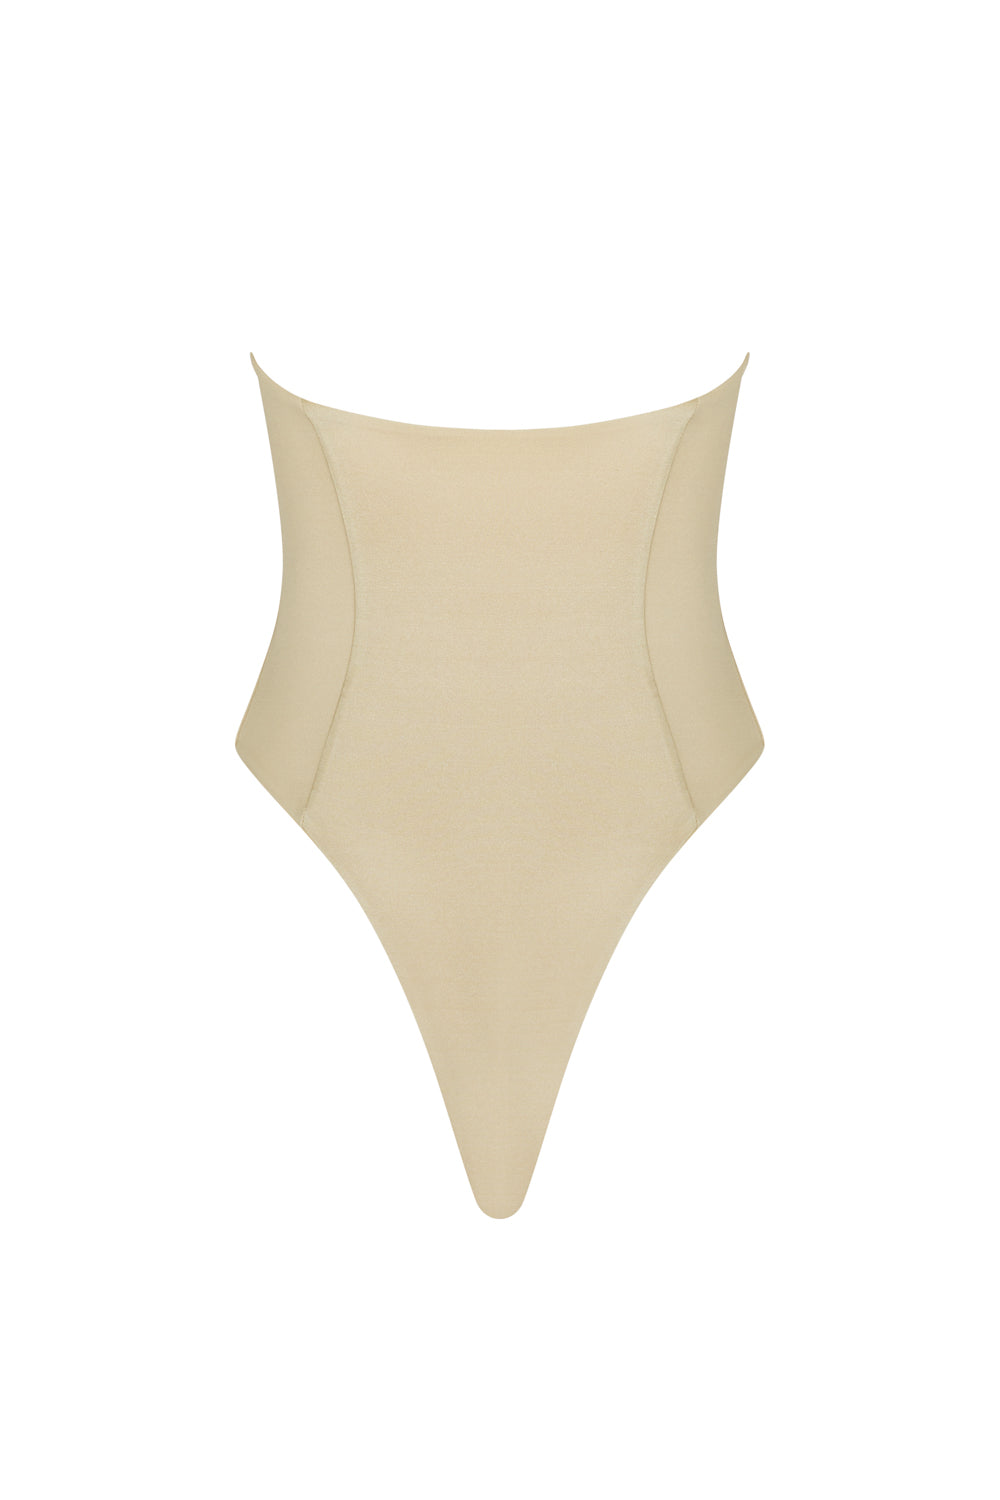 flook the label ella bendau swimsuit swimwear gold product image back